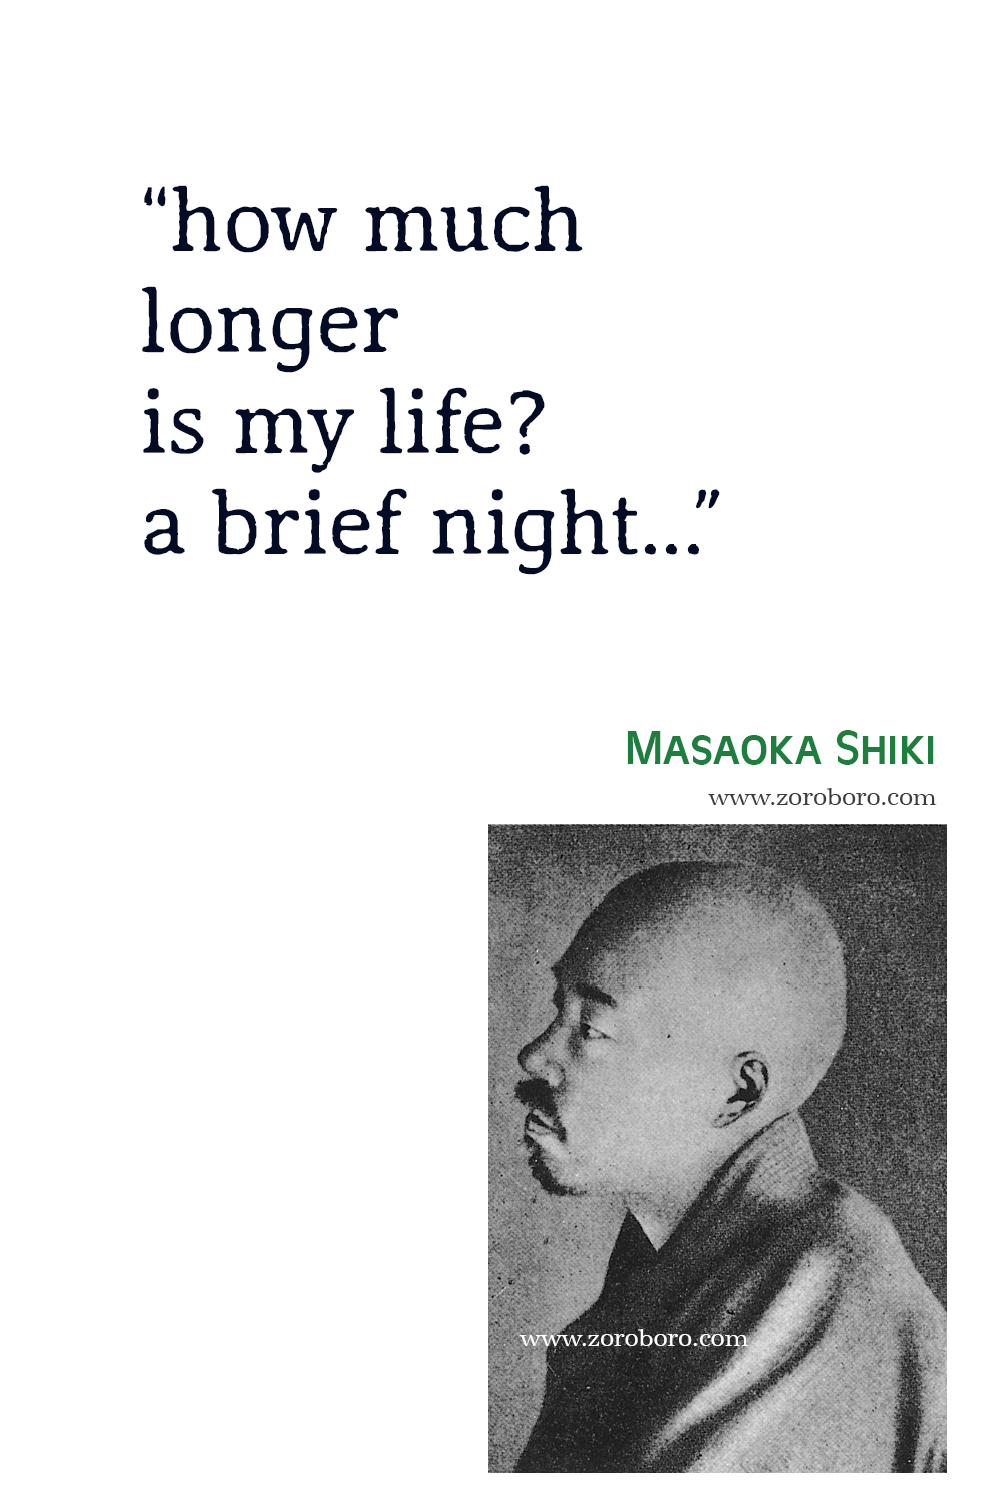 Masaoka Shiki Quotes. Masaoka Shiki Poems, Masaoka Shiki Poetry, Masaoka Shiki Books, Masaoka Shiki Famous Haiku Poems